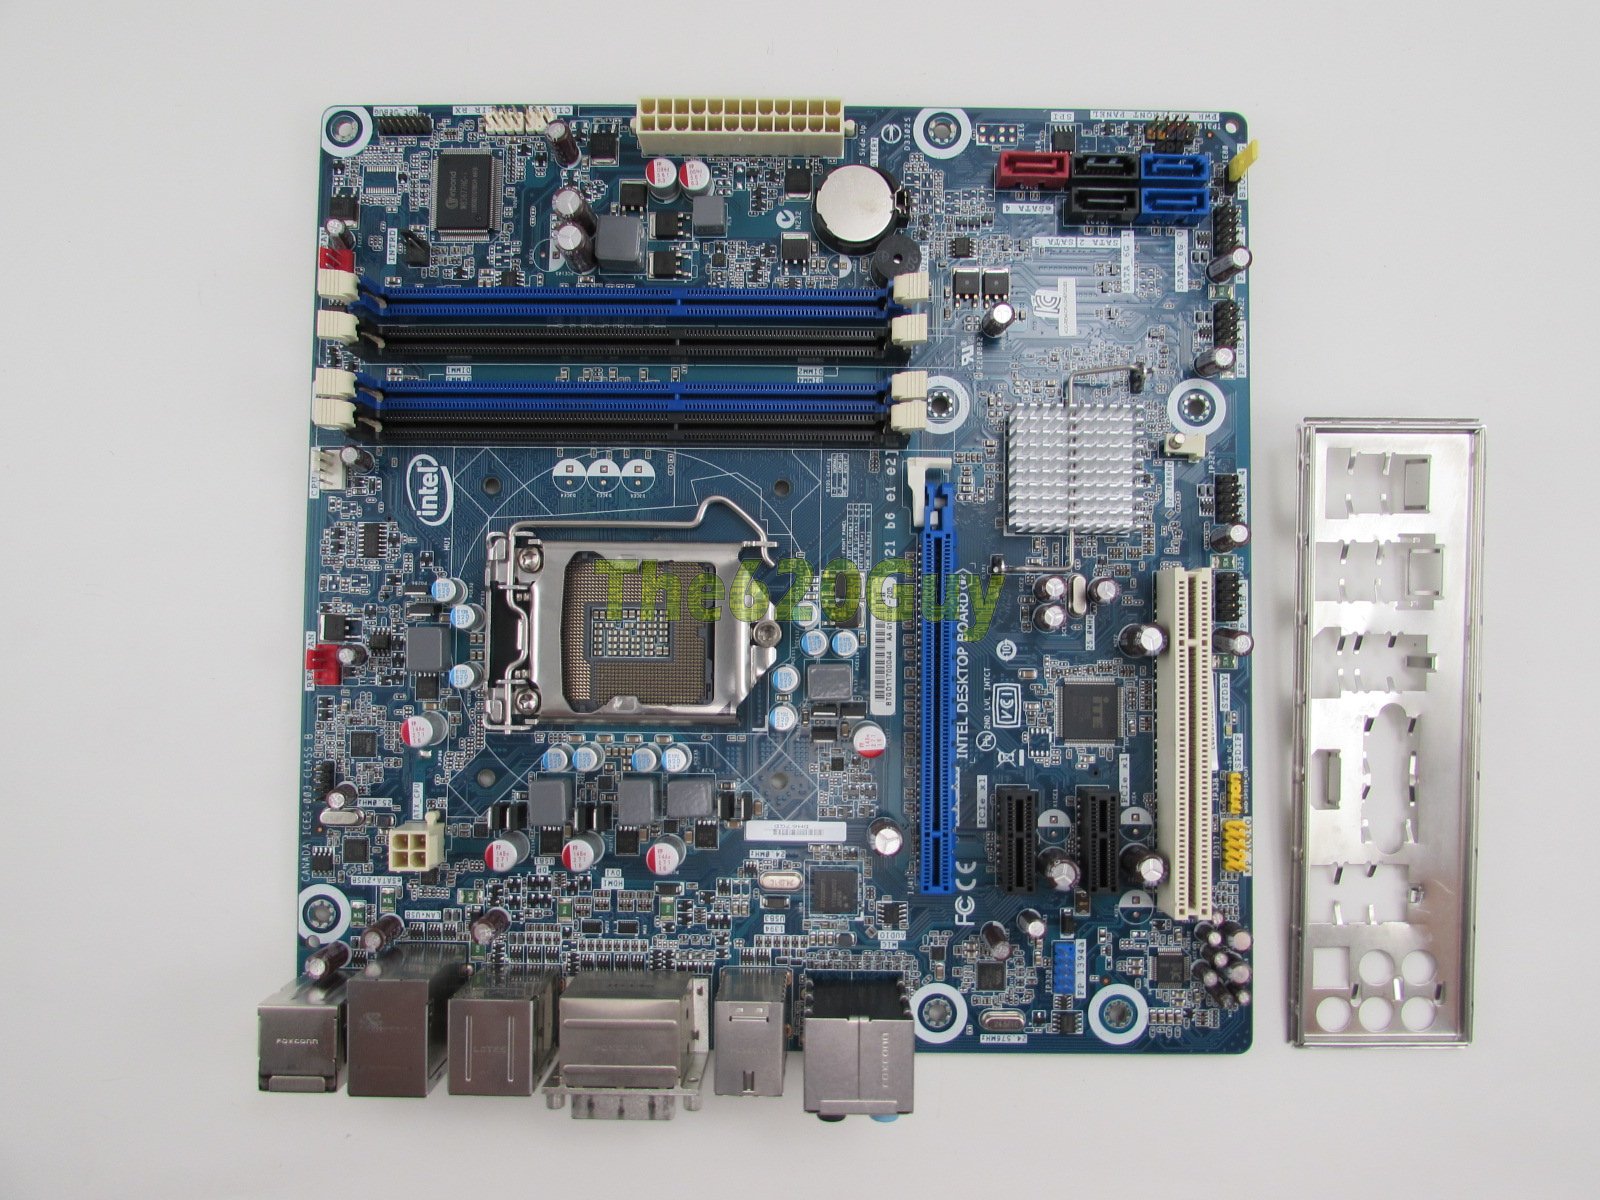 Fighter Evolve Fodgænger Intel DH67GD Motherboard G10206-205 H67 System Board Socket LGA 1155  MicroATX - The620Guy.com